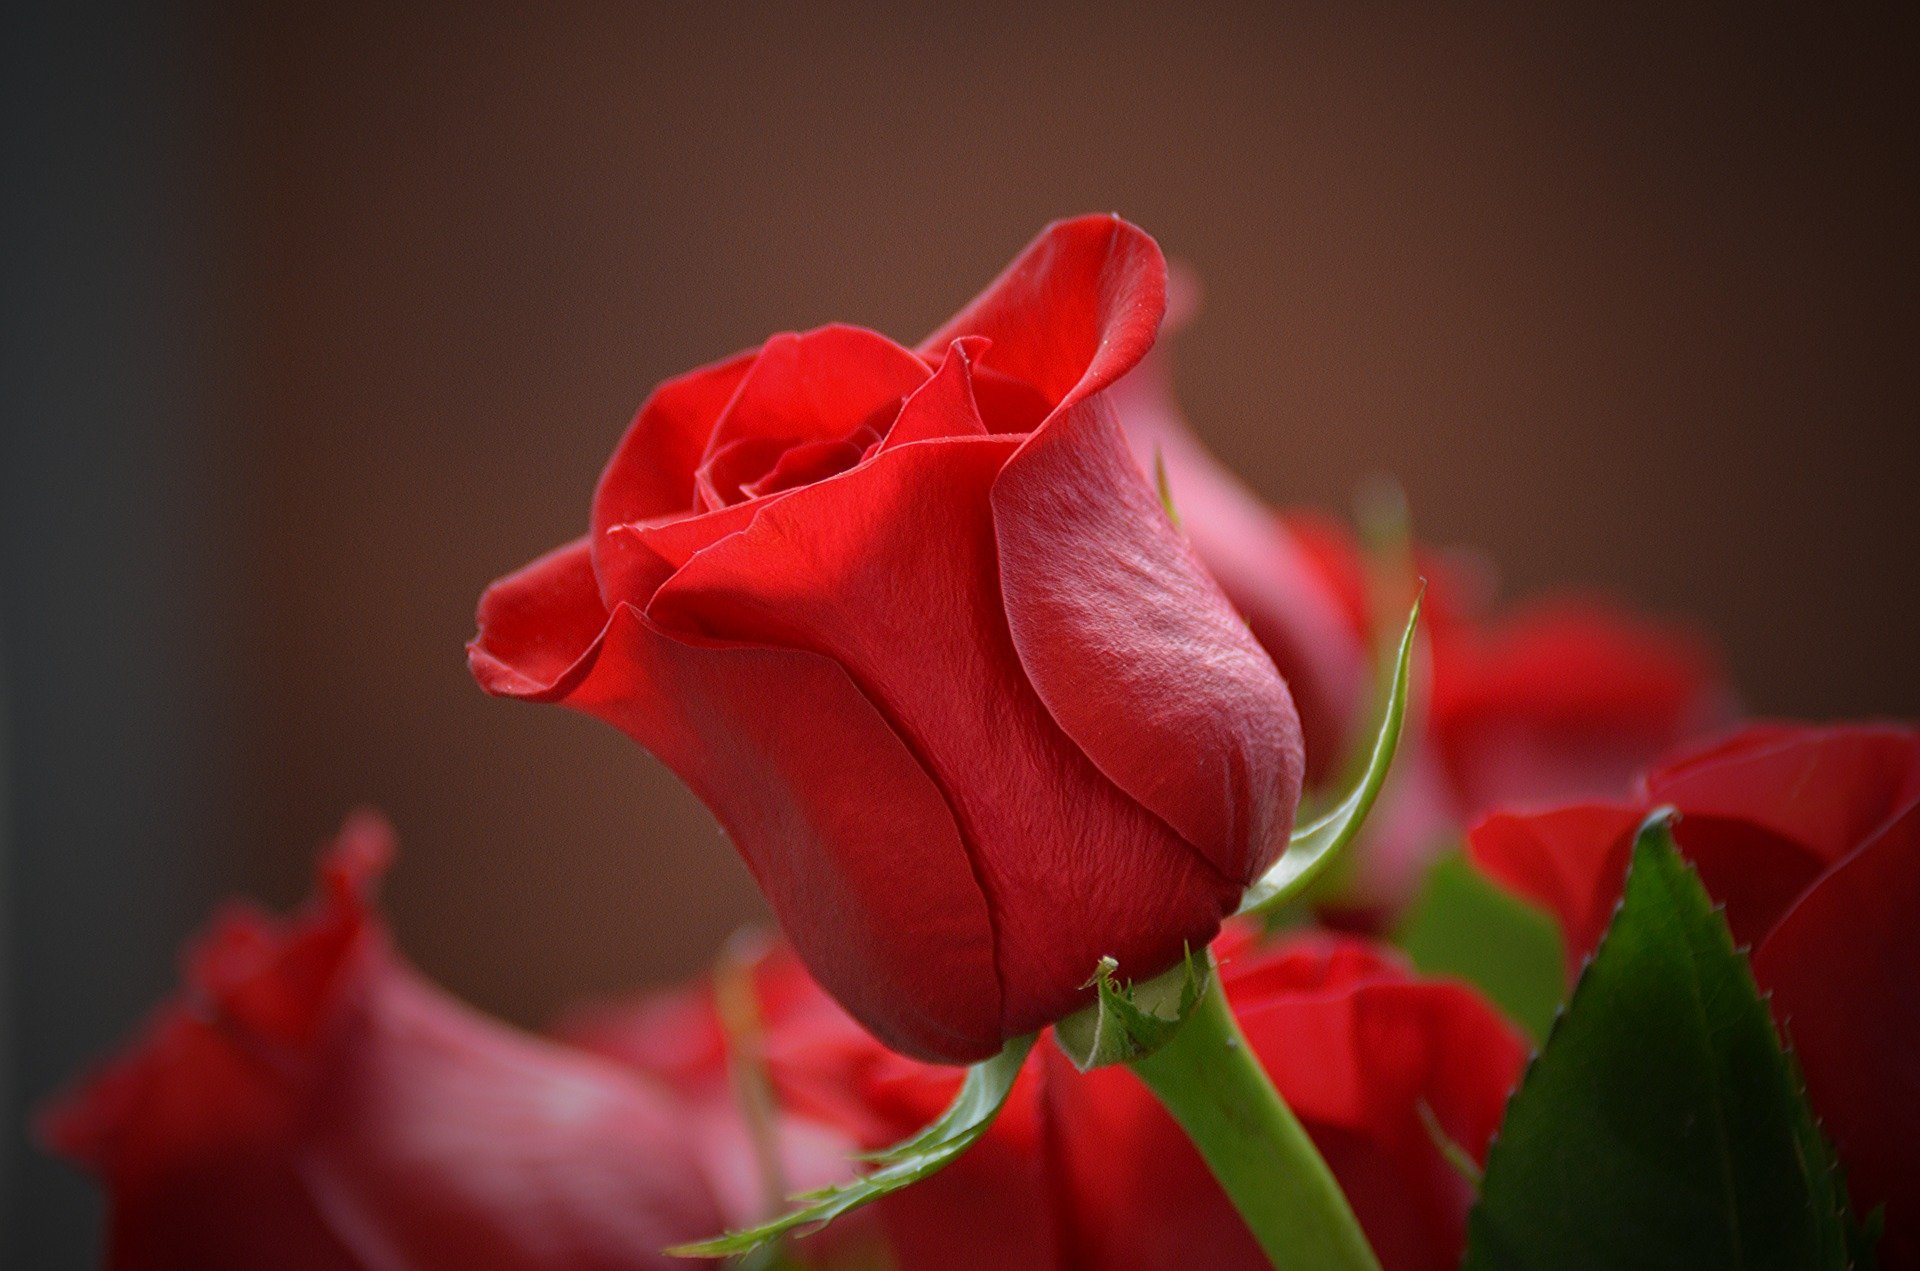 Red rose. | Source: Pixabay